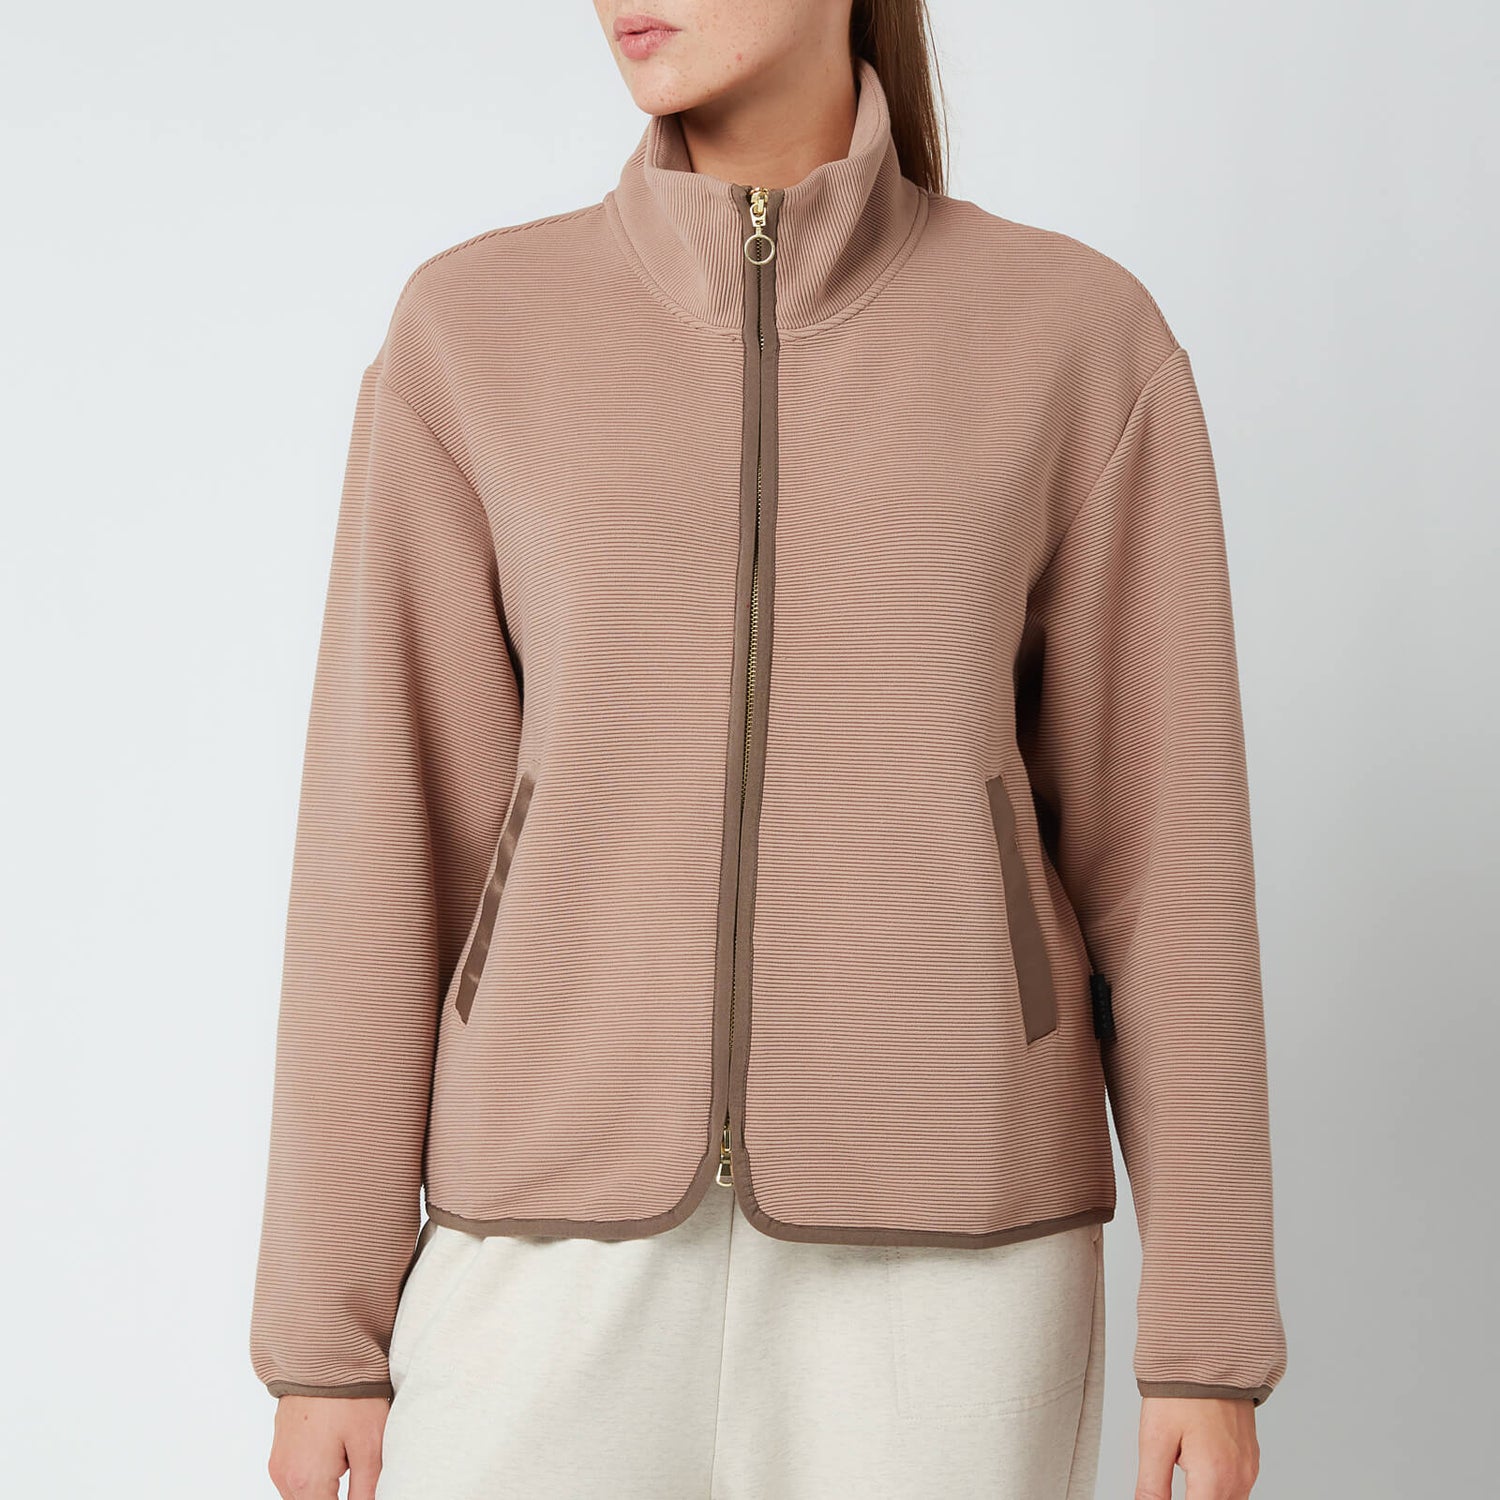 Varley Women's Berendo Fleece Jacket - Portabella